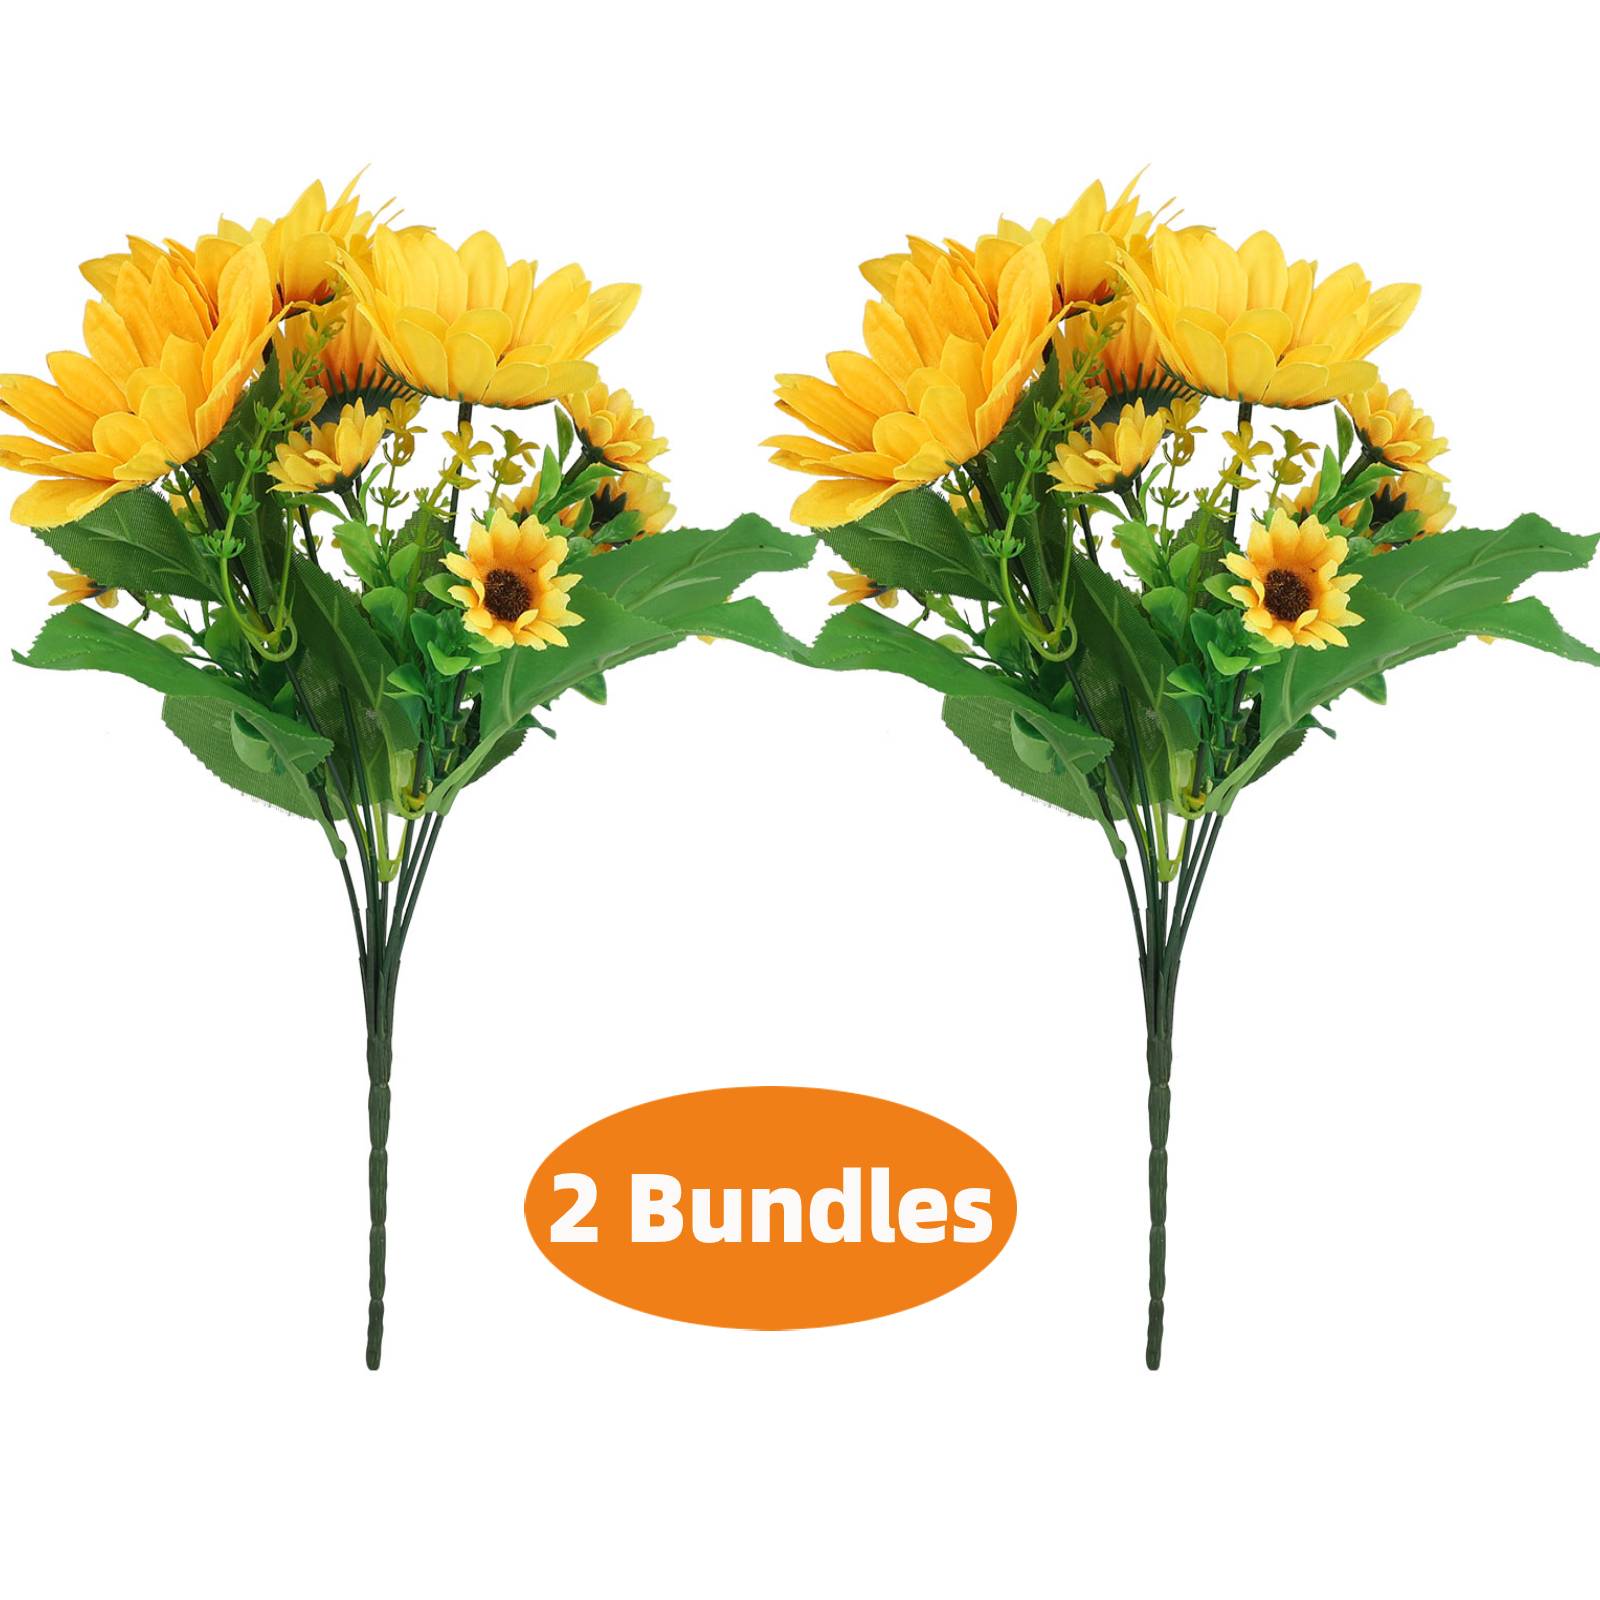 Z❤️ 2 Bundles Yellow Sunflowers